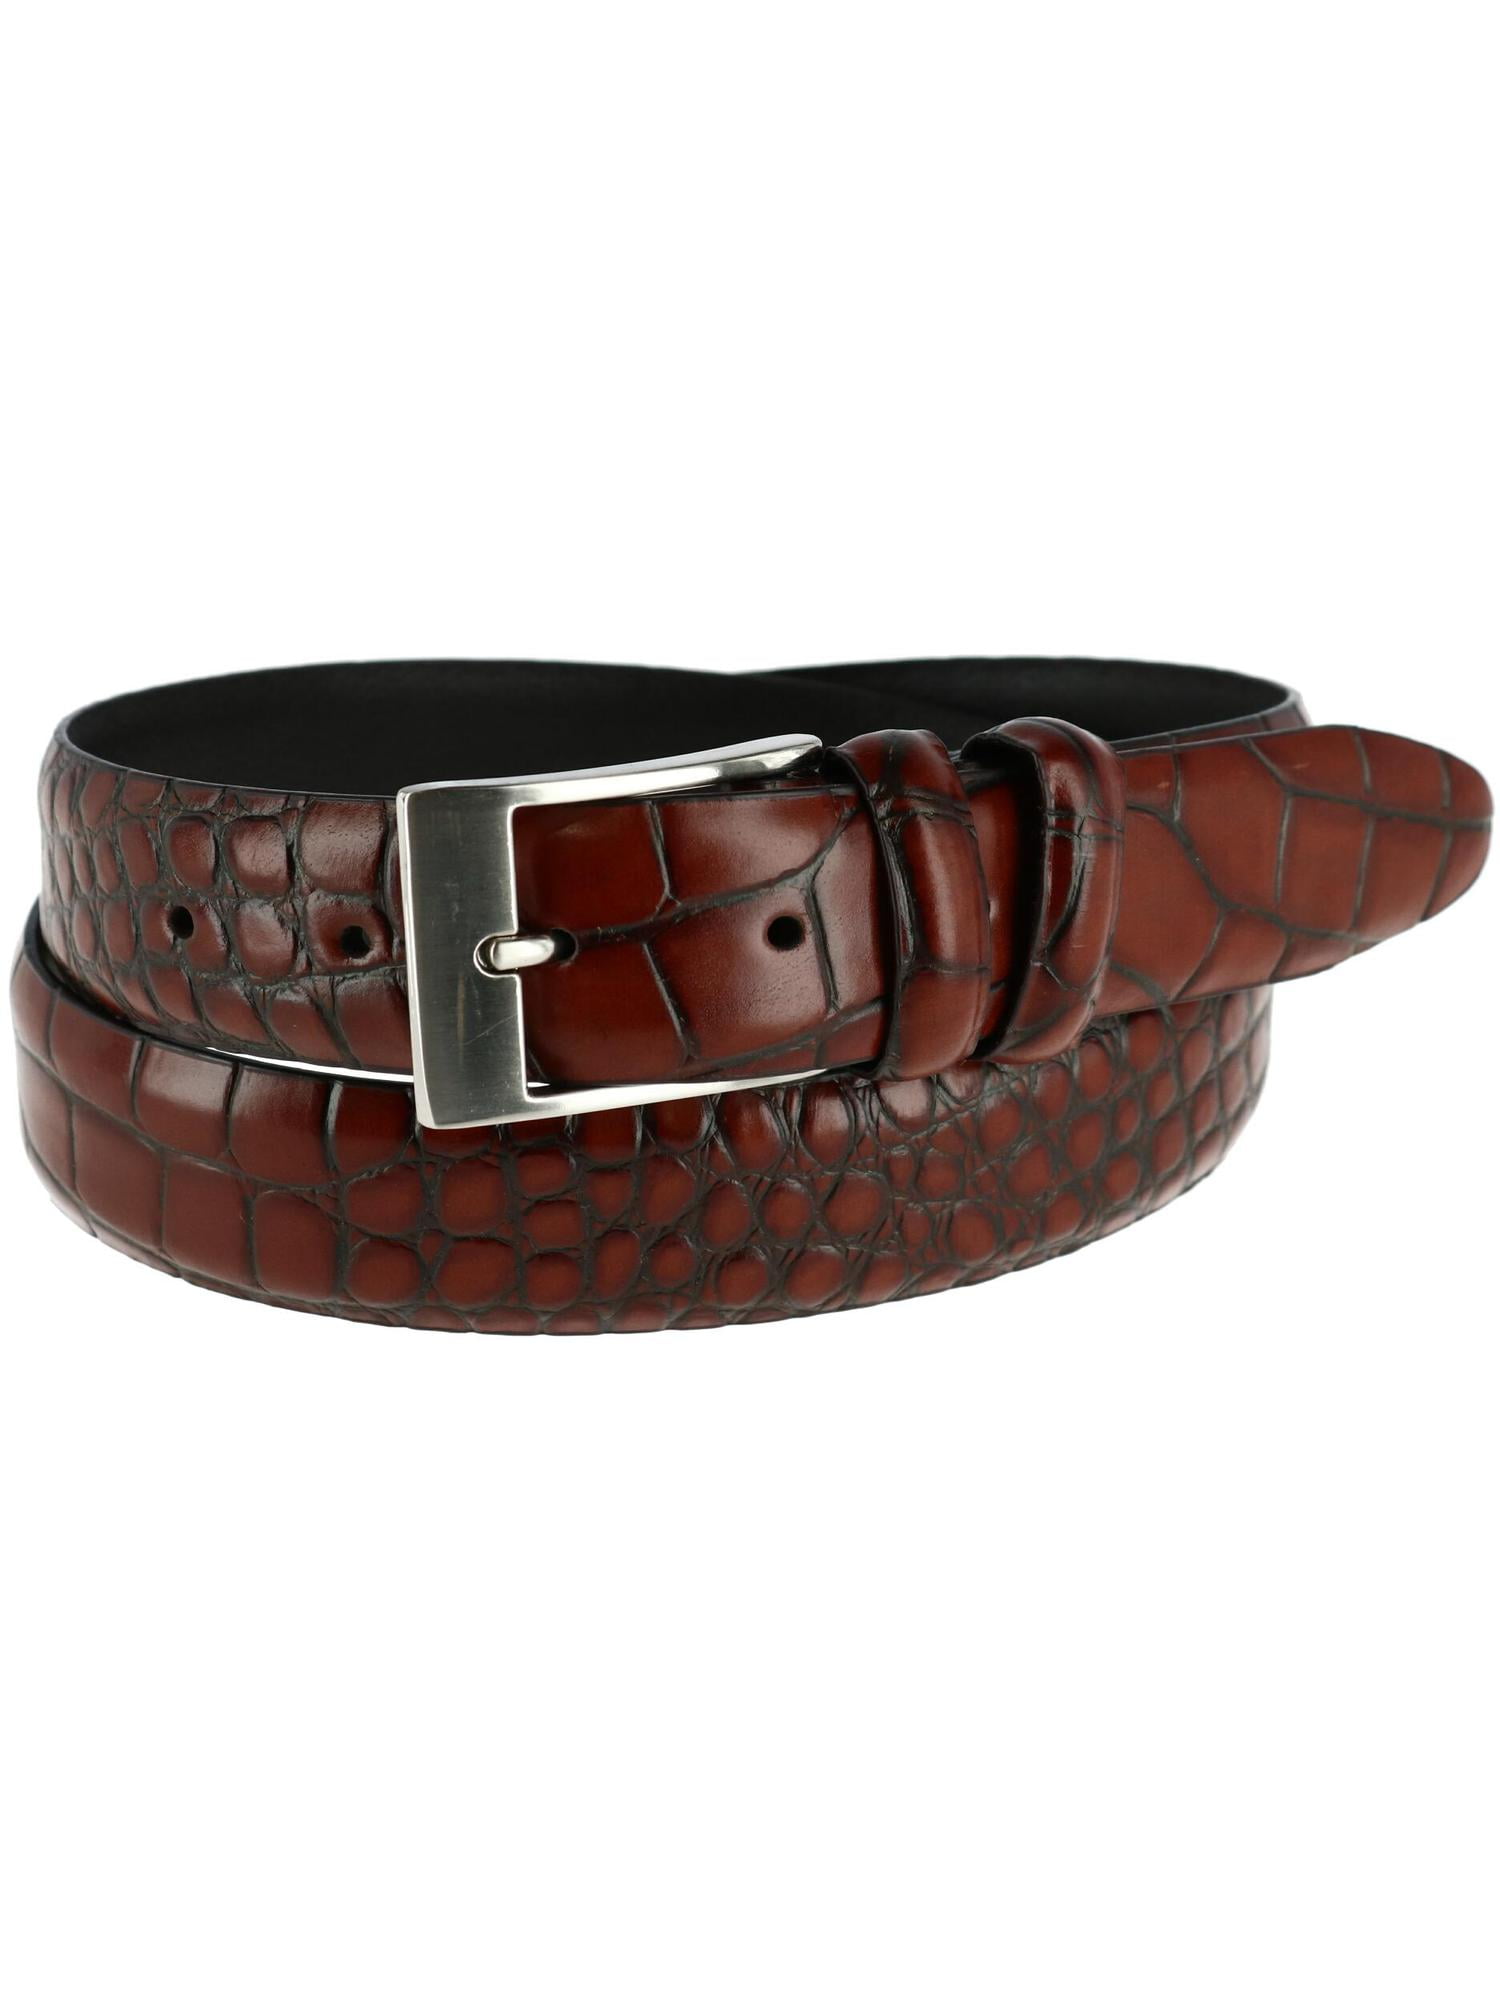 New Mens Crocodile Texture Genuine Leather 35mm Wide Buckle Belts S-XXXL 